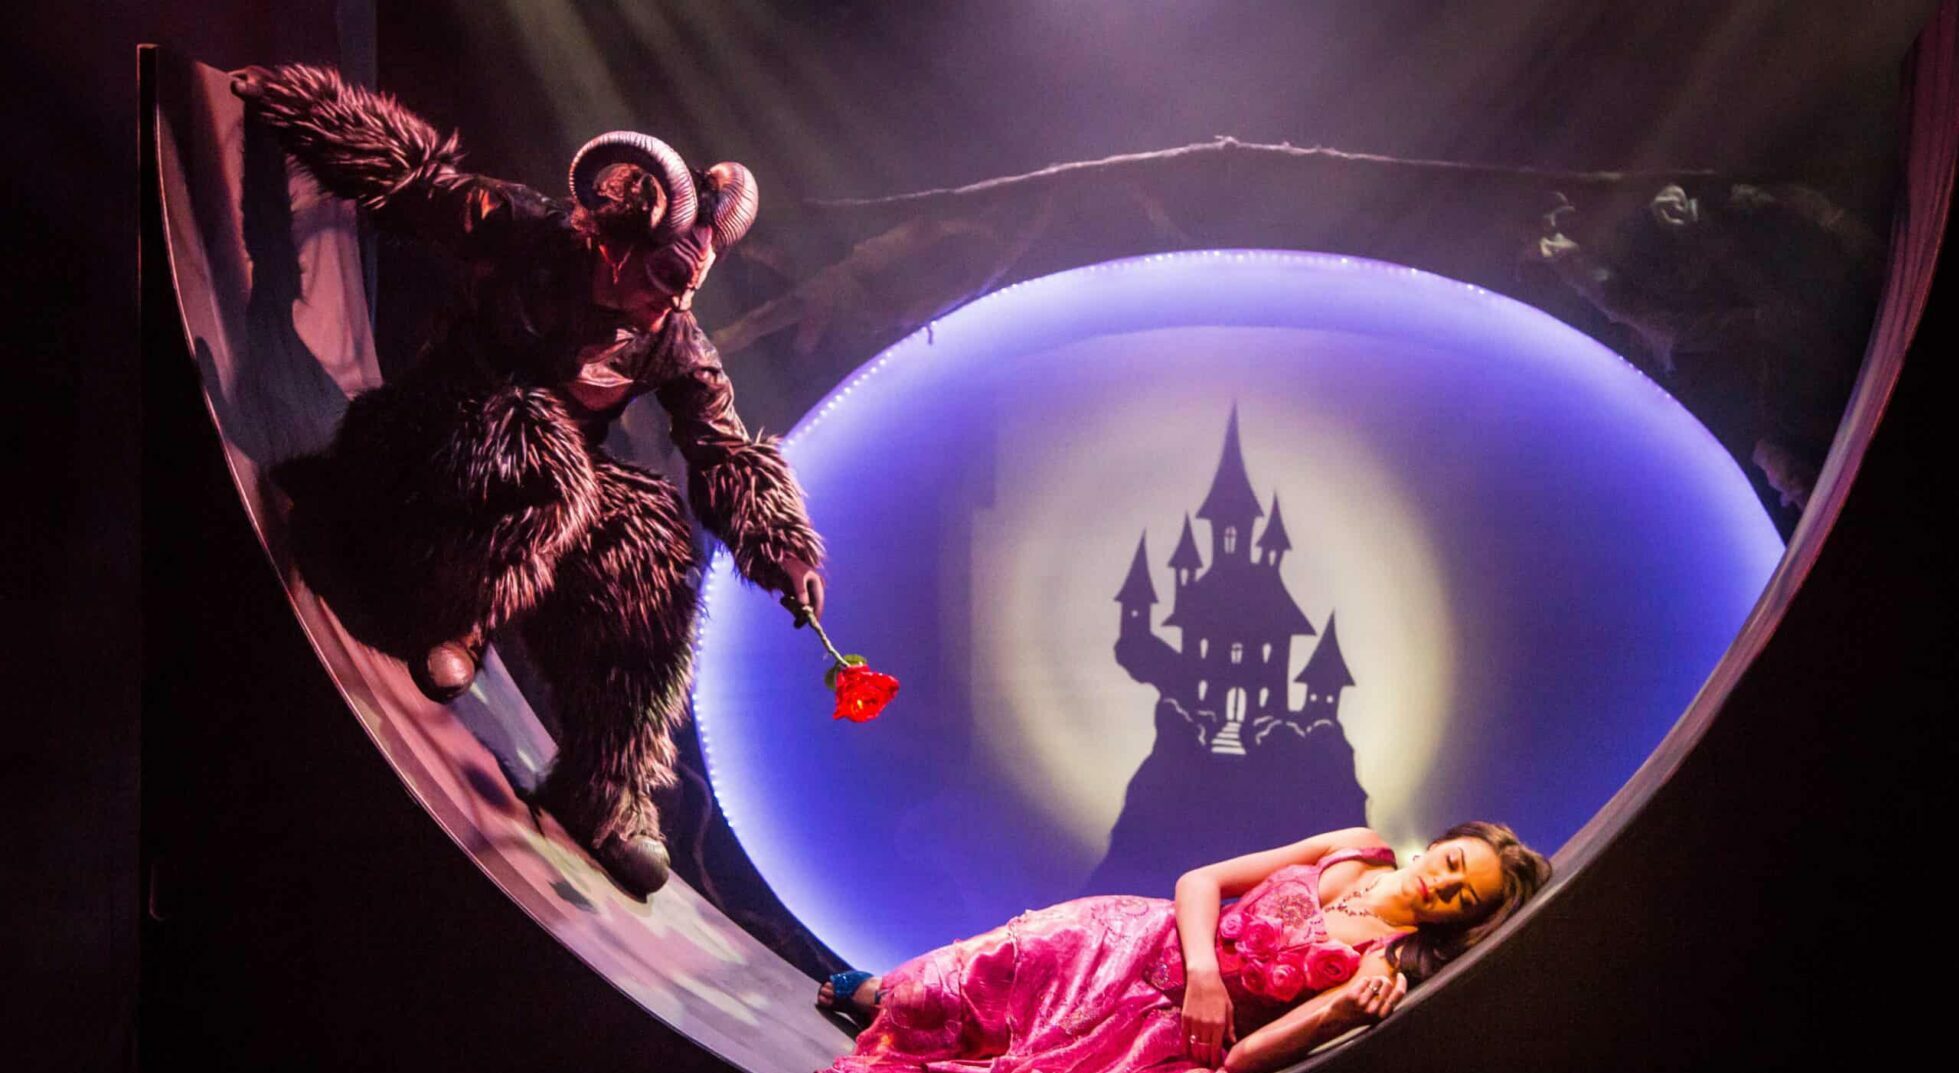 Man in Beast costume holds rose near sleeping woman.